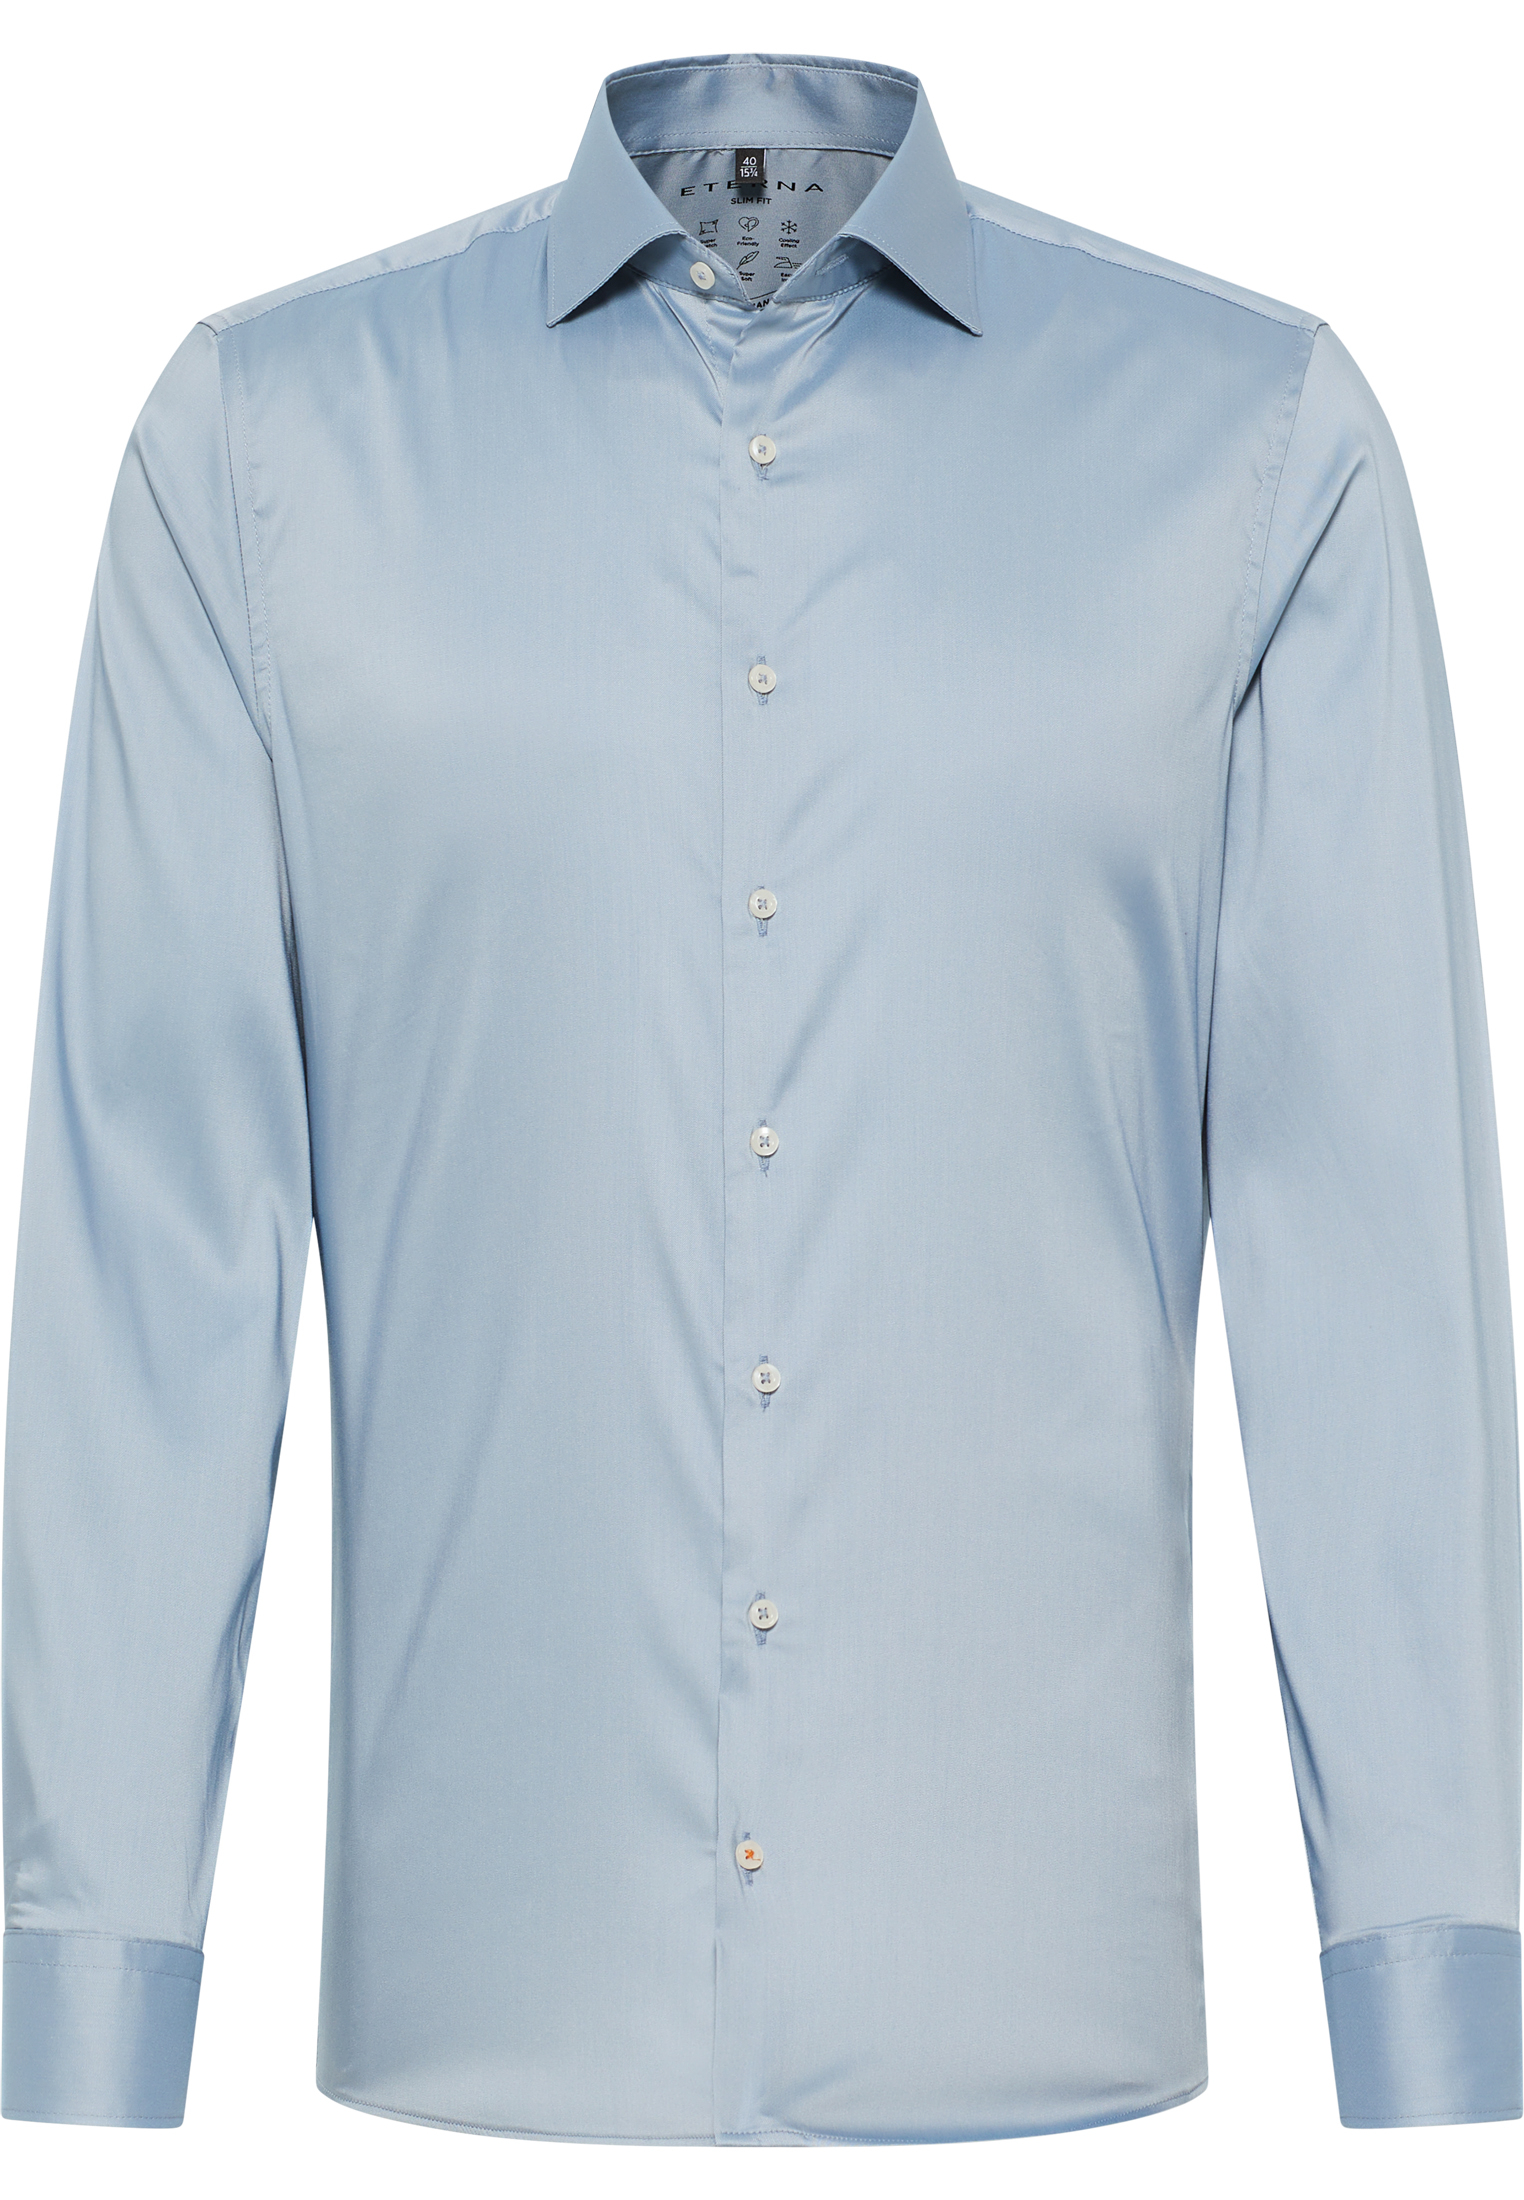 SLIM FIT Performance Shirt in graublau unifarben